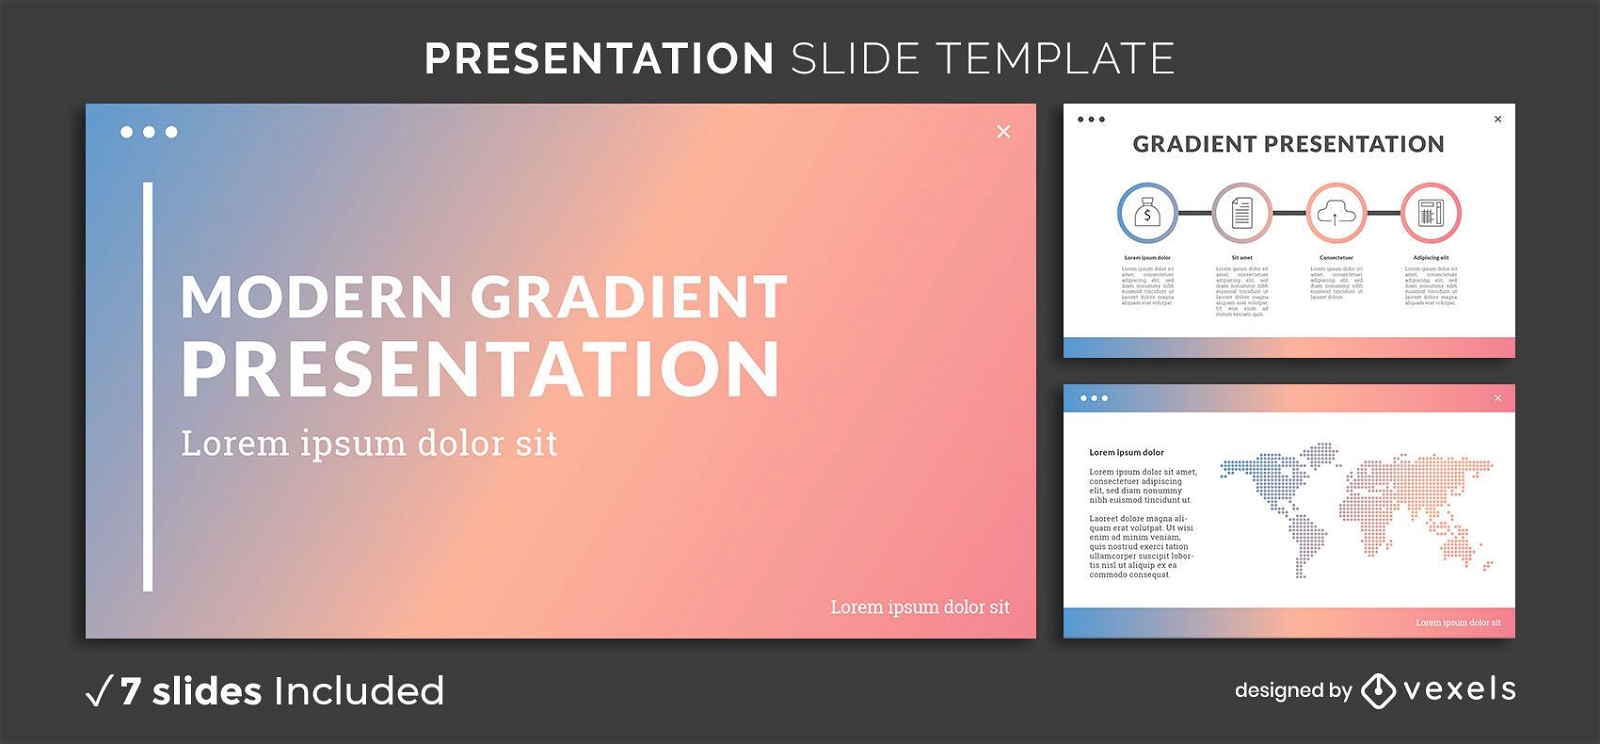 Modern Gradient Presentation Template